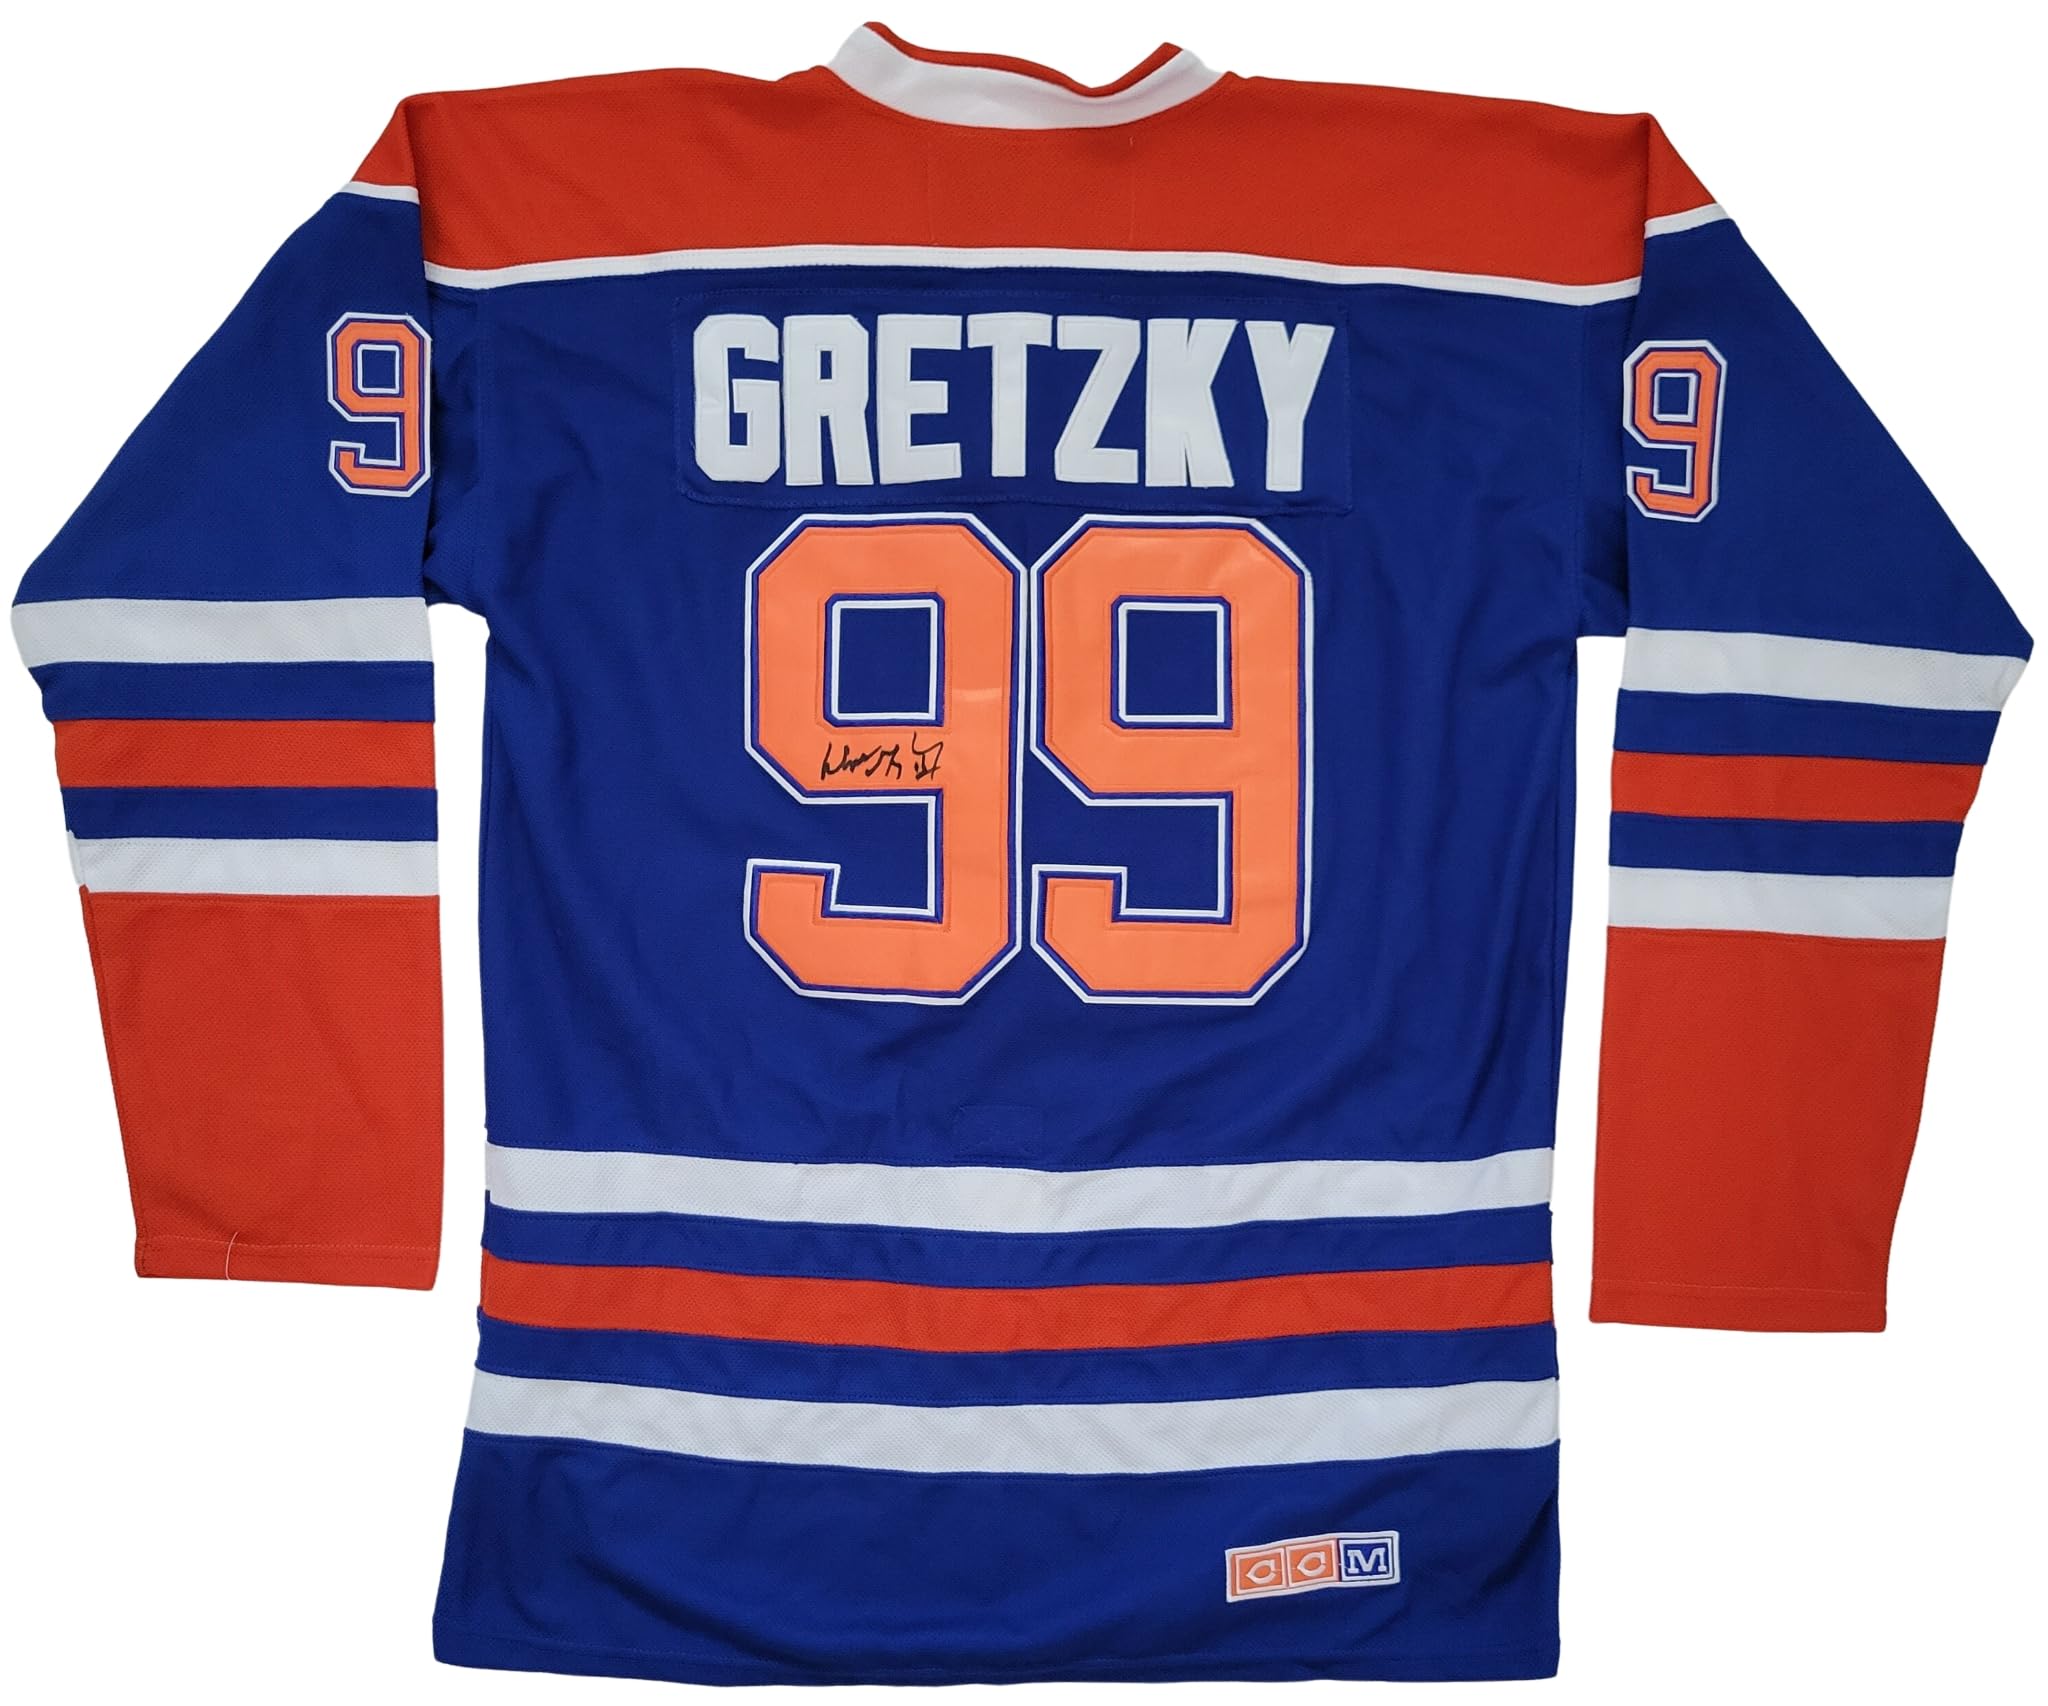 Wayne Gretzky Signed Oilers Hockey Jersey Exact Proof COA Autographed - Coast to Coast Collectibles Memorabilia - #sports_memorabilia#- #